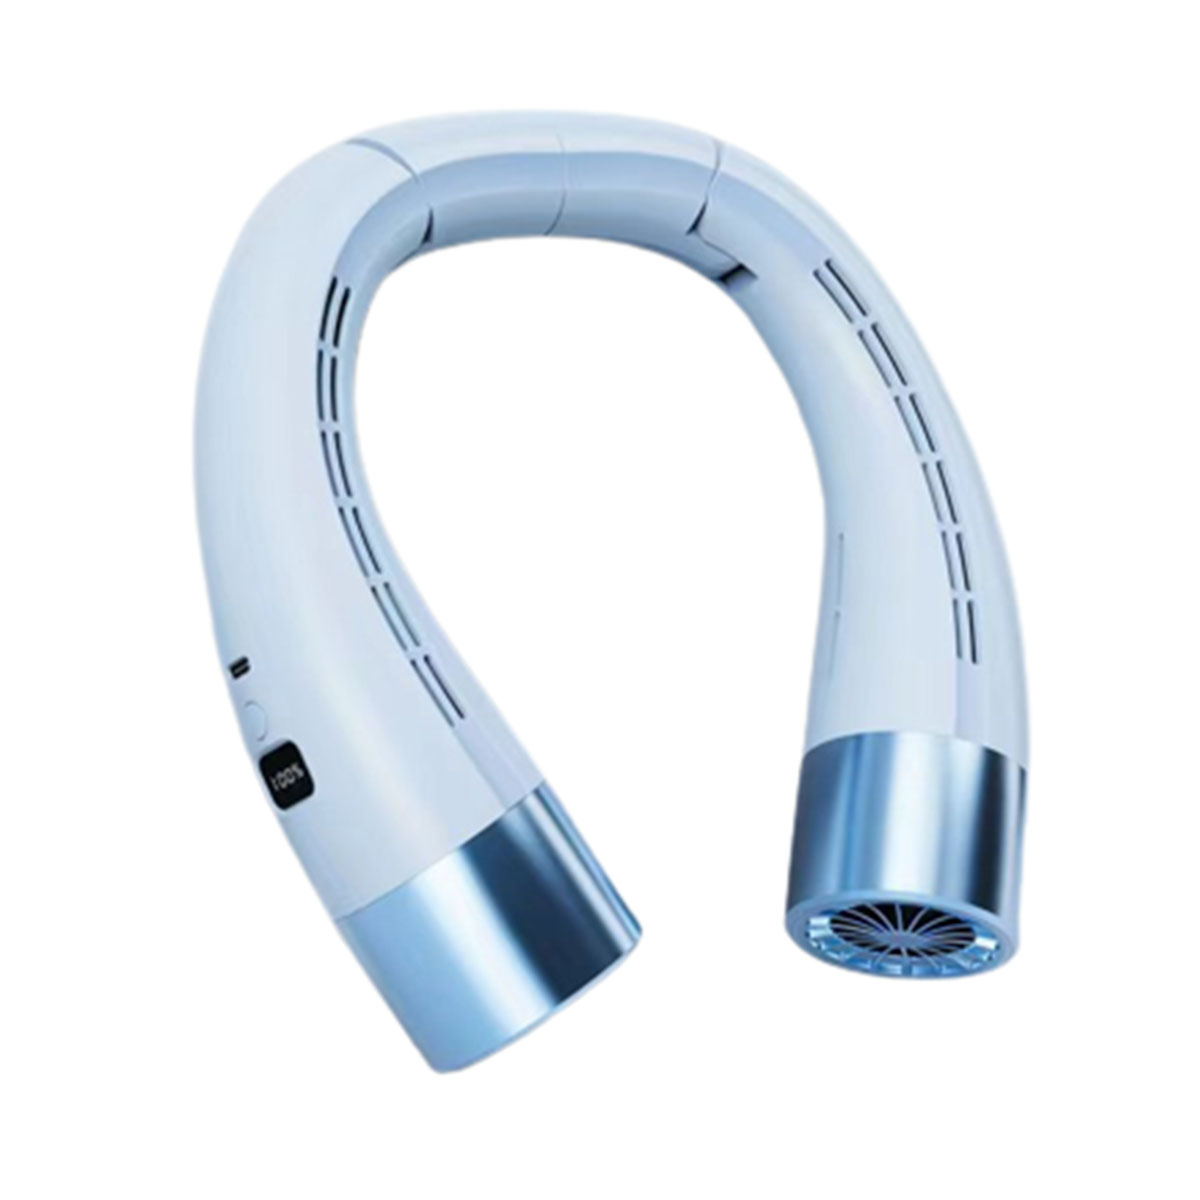 SYNTEK Fan weiß USB faltbare hängende Blatt Nacken Fan tragbare Hals Ventilator stille Weiß